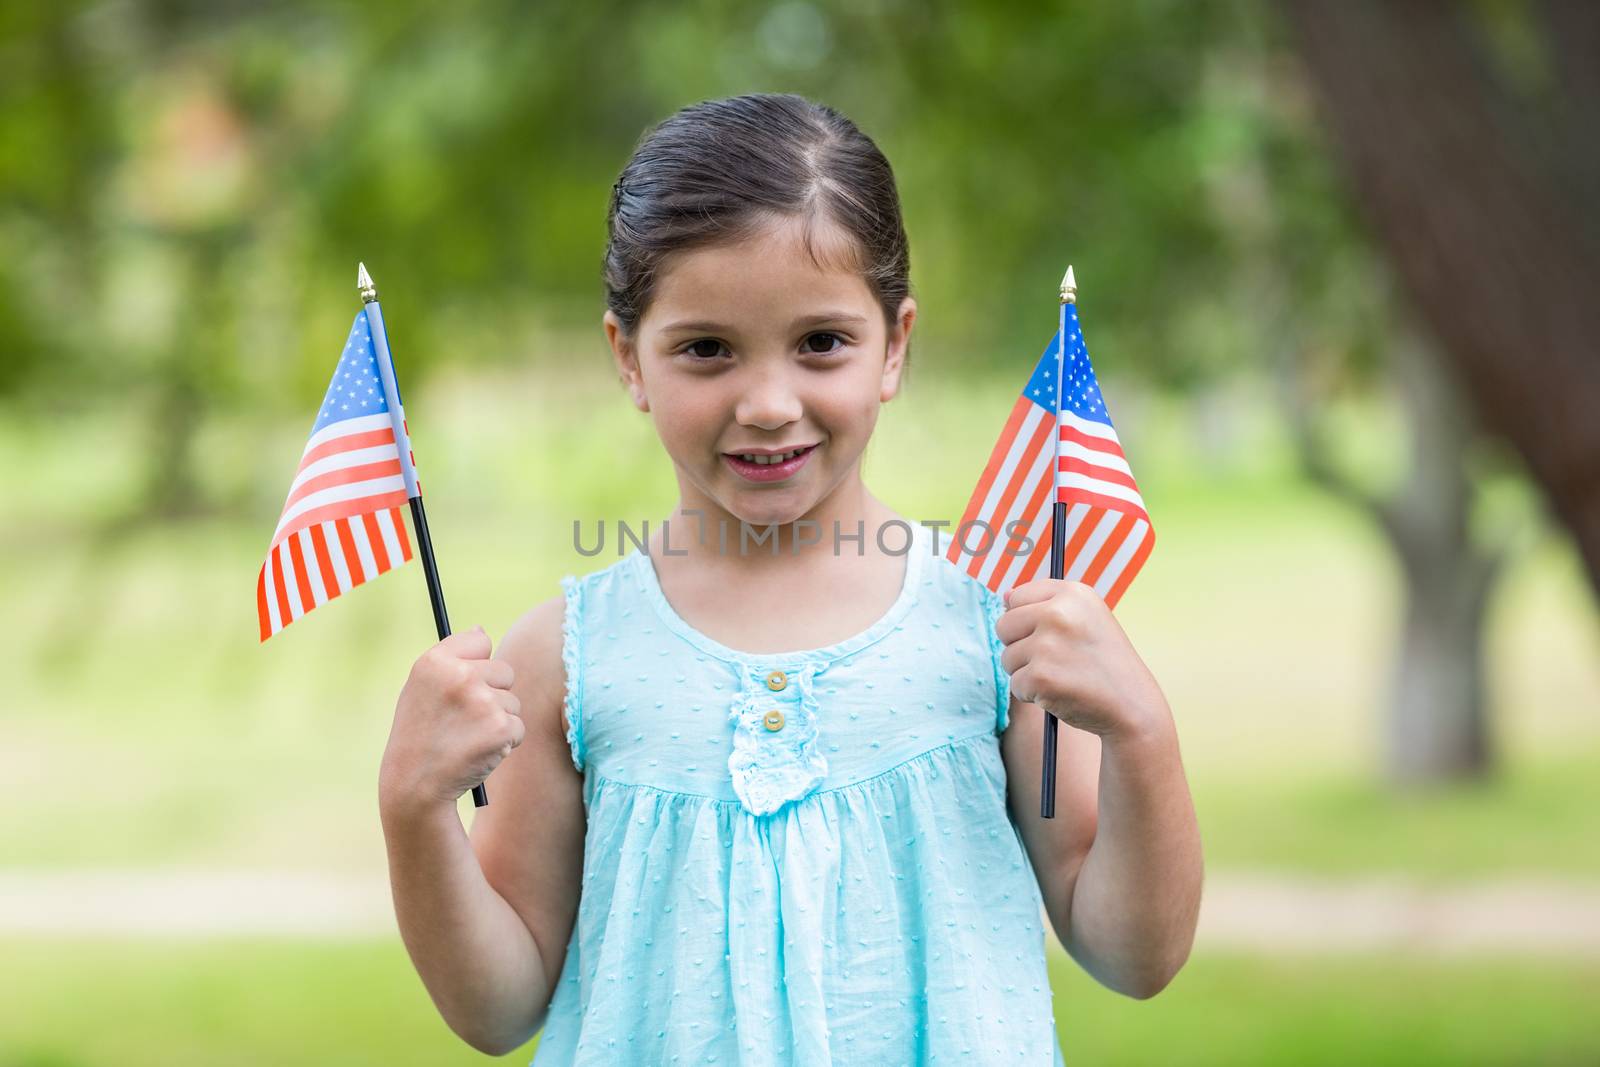 Little girl waving american flag by Wavebreakmedia